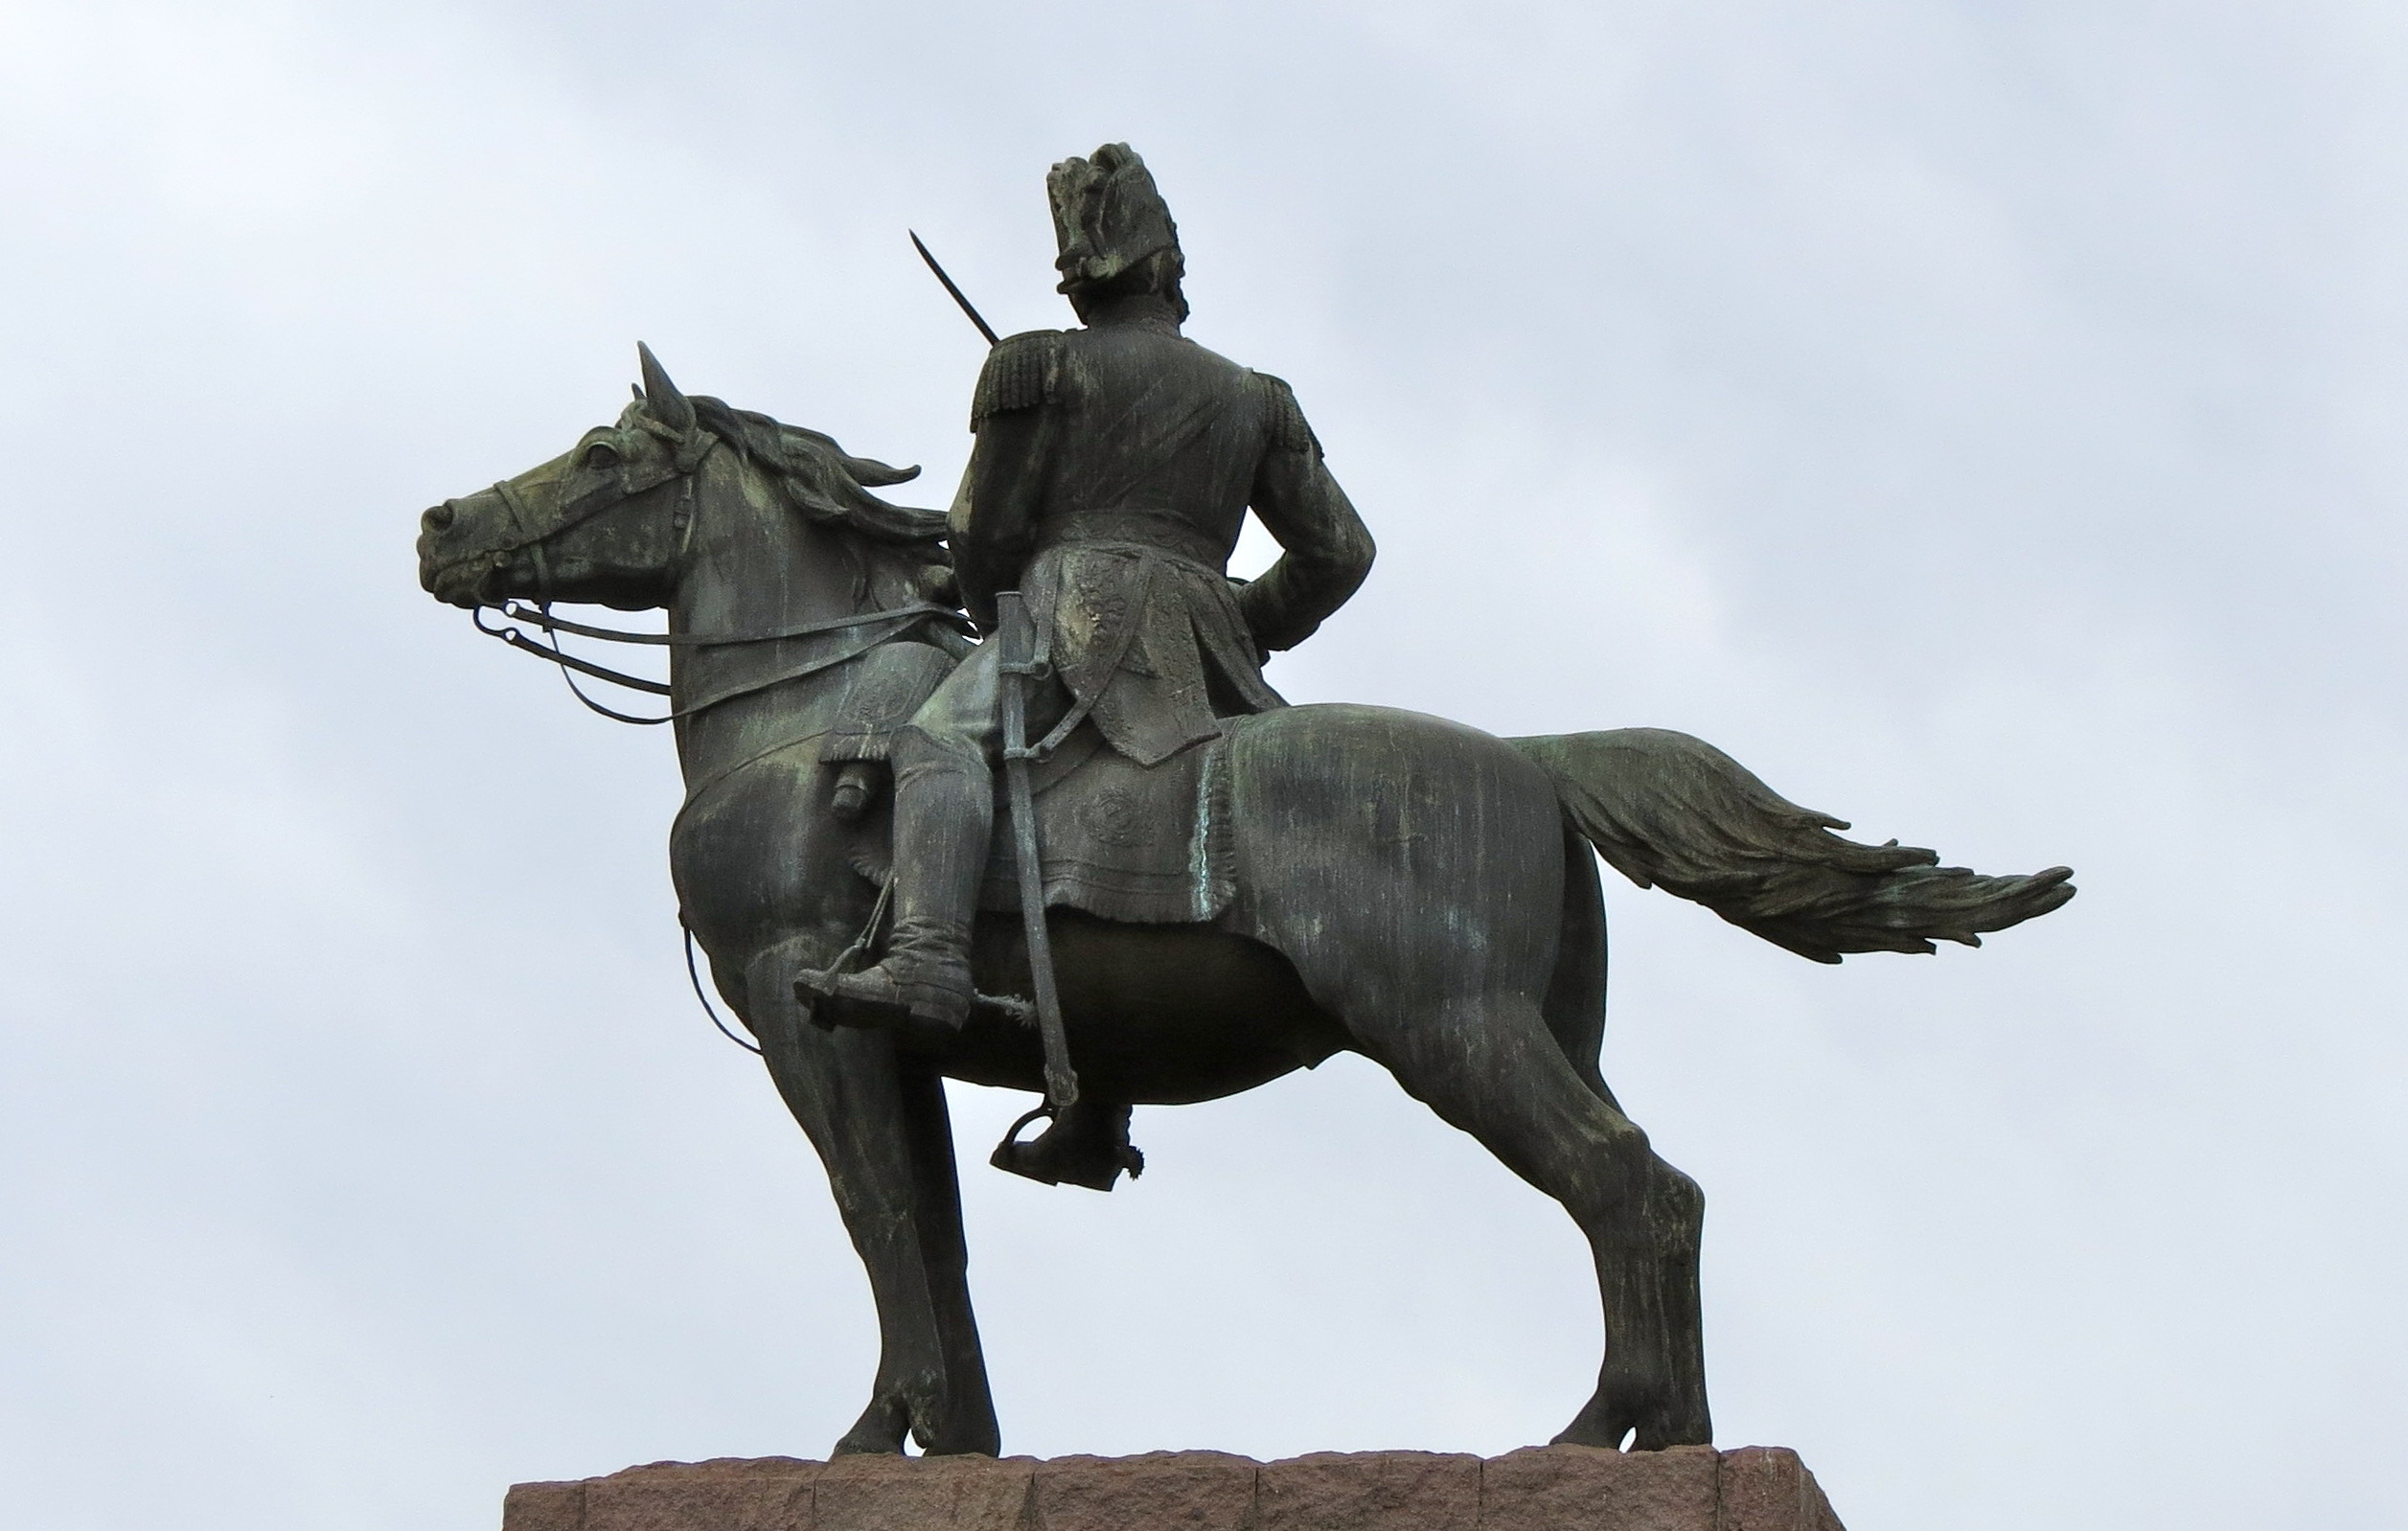 Equestrian statue of Justo José Urquiza in Buenos Aires Argentina